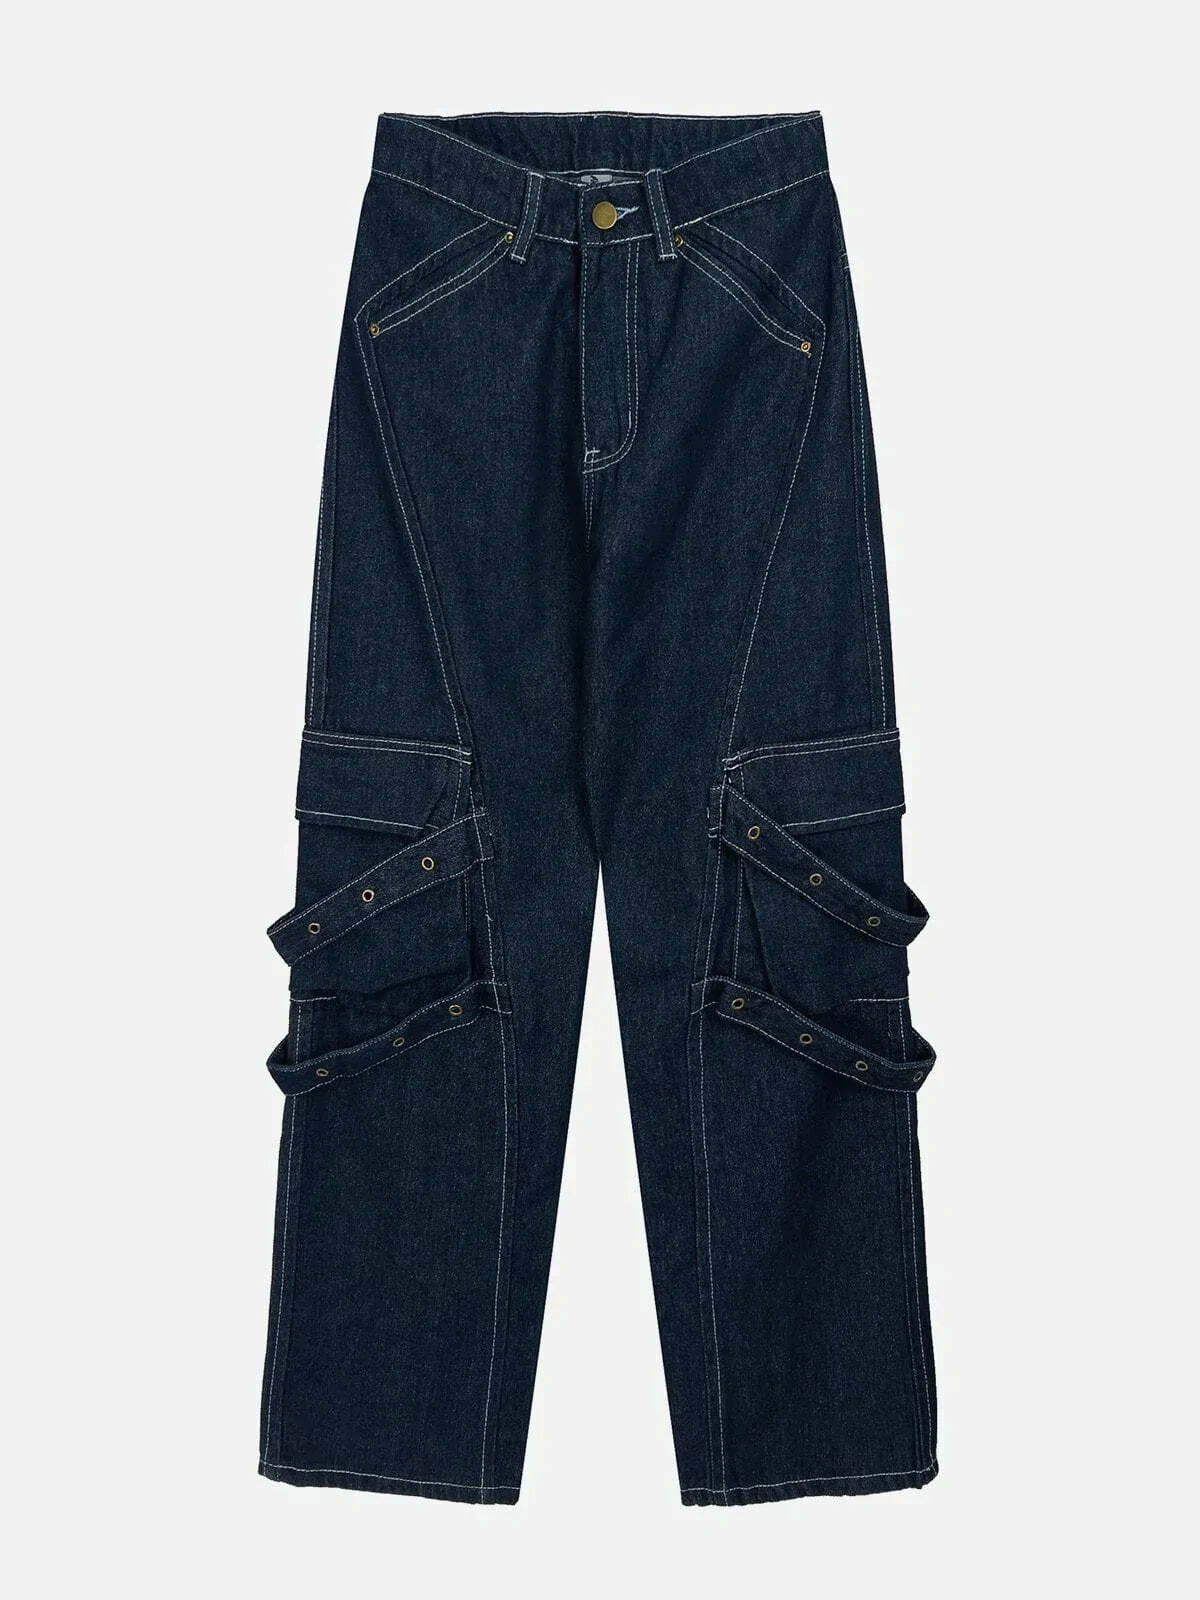 strap detail spliced jeans edgy streetwear essential 4242